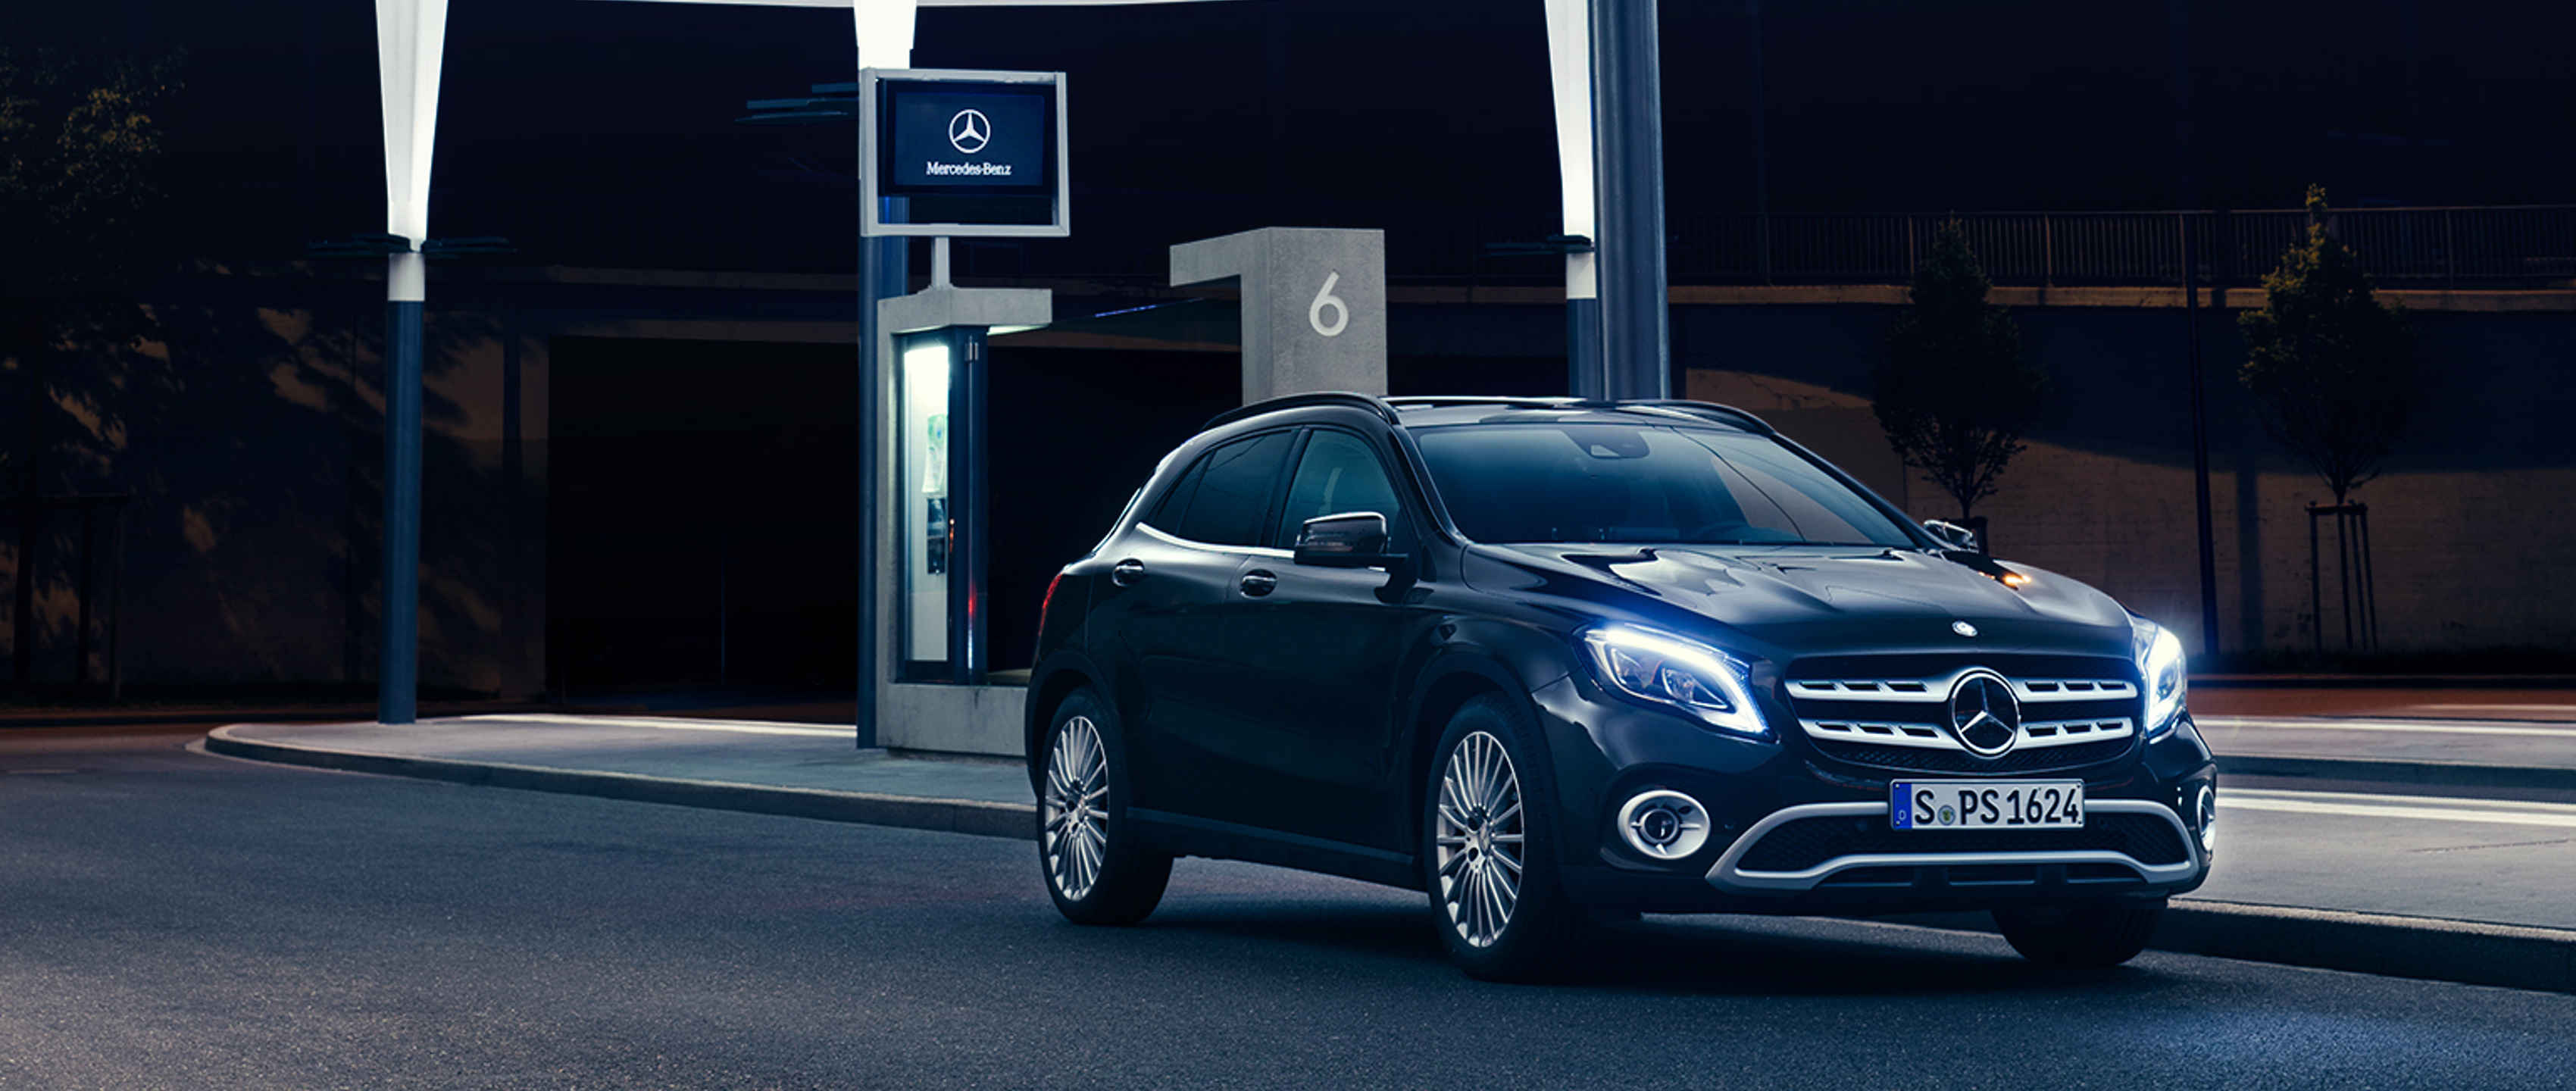 Mercedes-Benz GLA, MBSocialCar wallpaper, Automotive style, GLA luxury, 3400x1440 Dual Screen Desktop